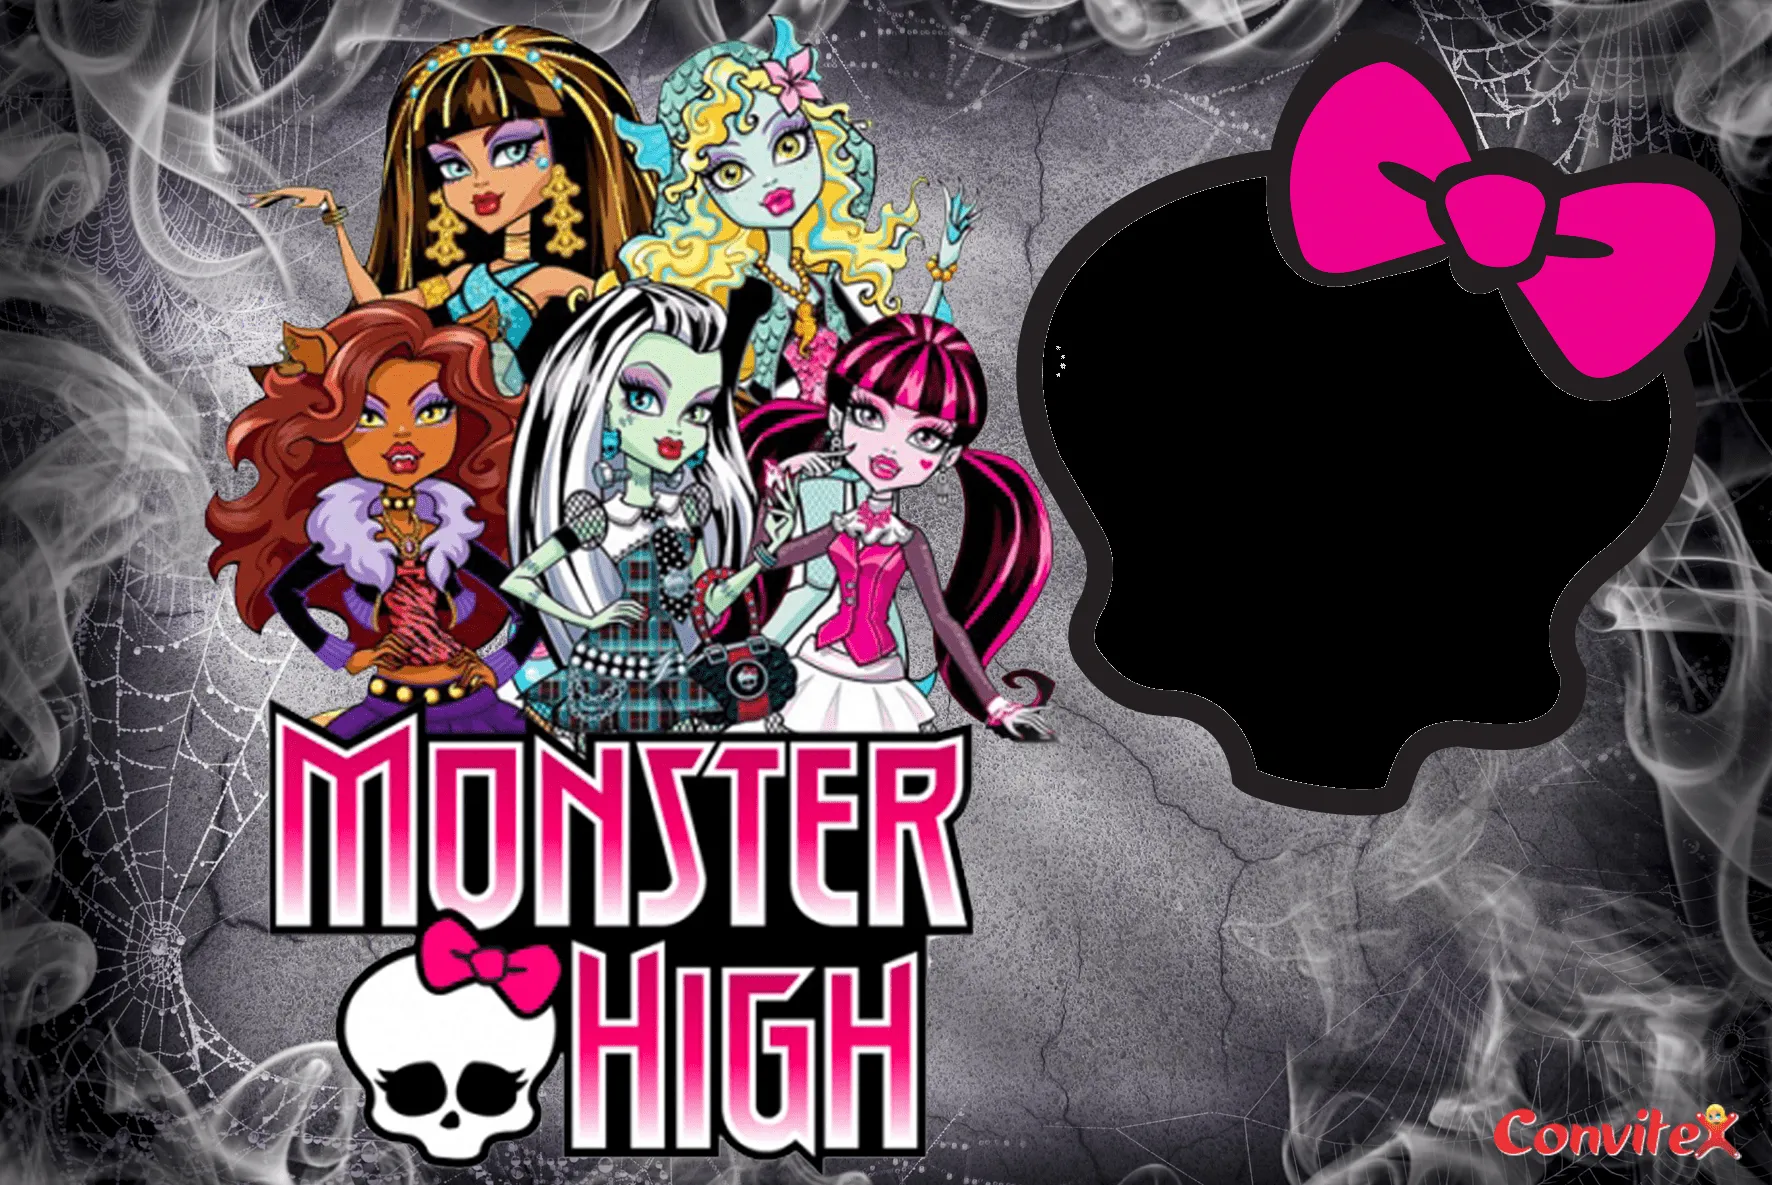 Convite ou Frame Monster High « Convitex